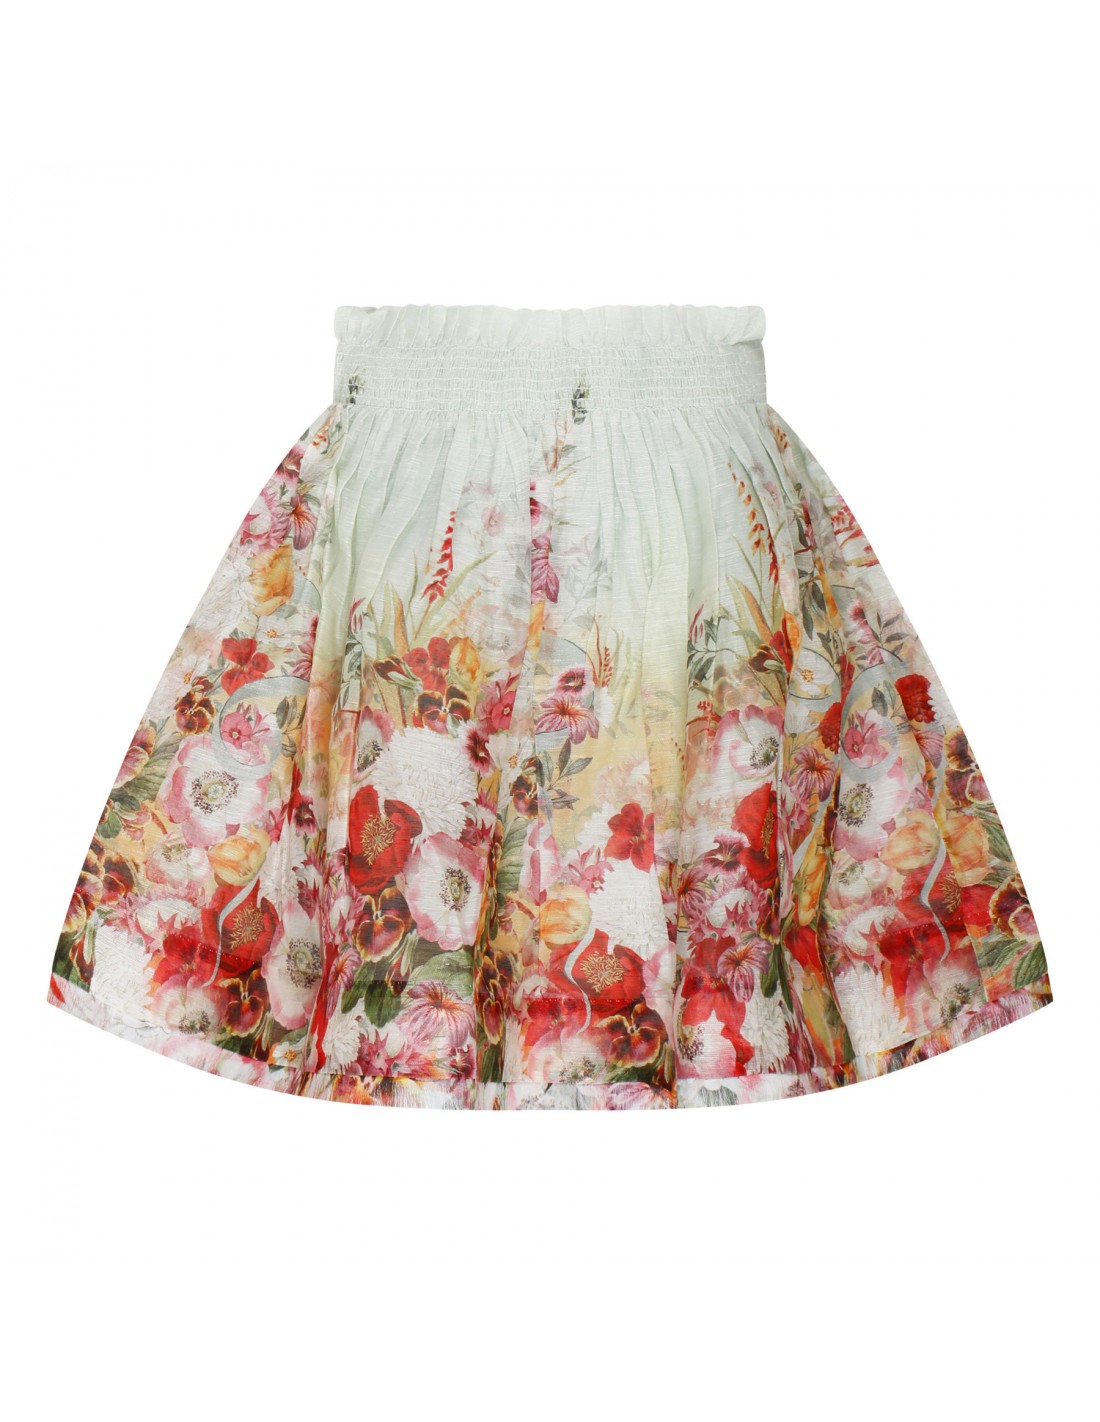 Wonderland flip skirt